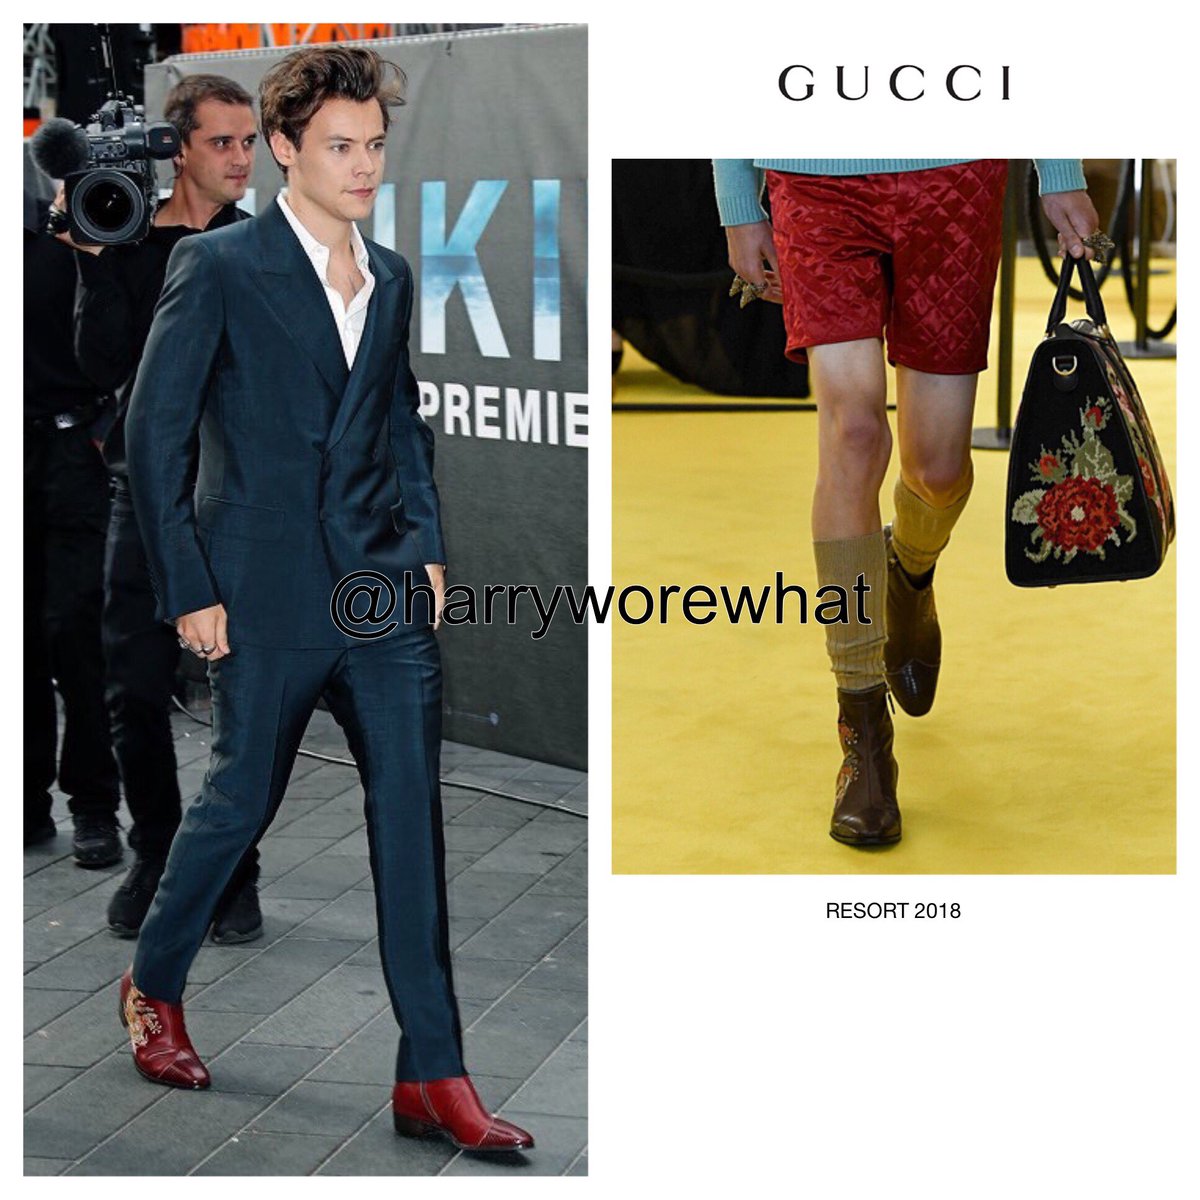 Harry wore #Gucci Resort 